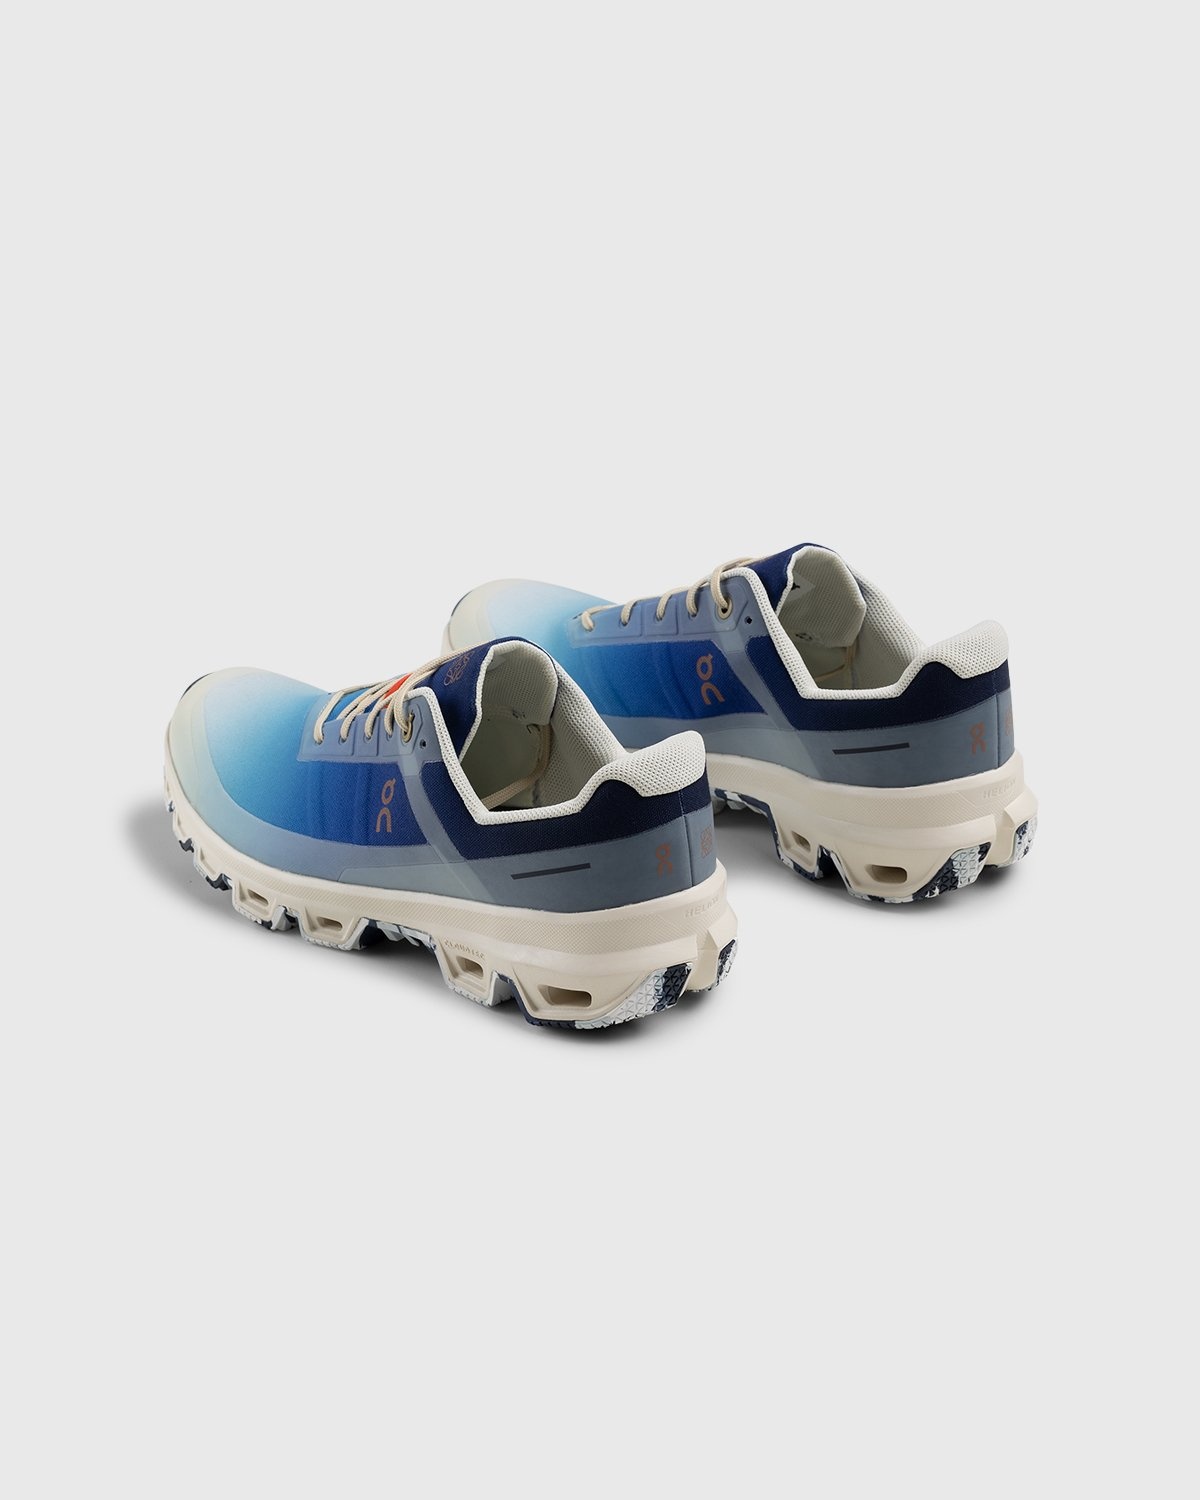 Loewe x On – Men's Cloudventure Gradient Blue - Low Top Sneakers - Blue - Image 4